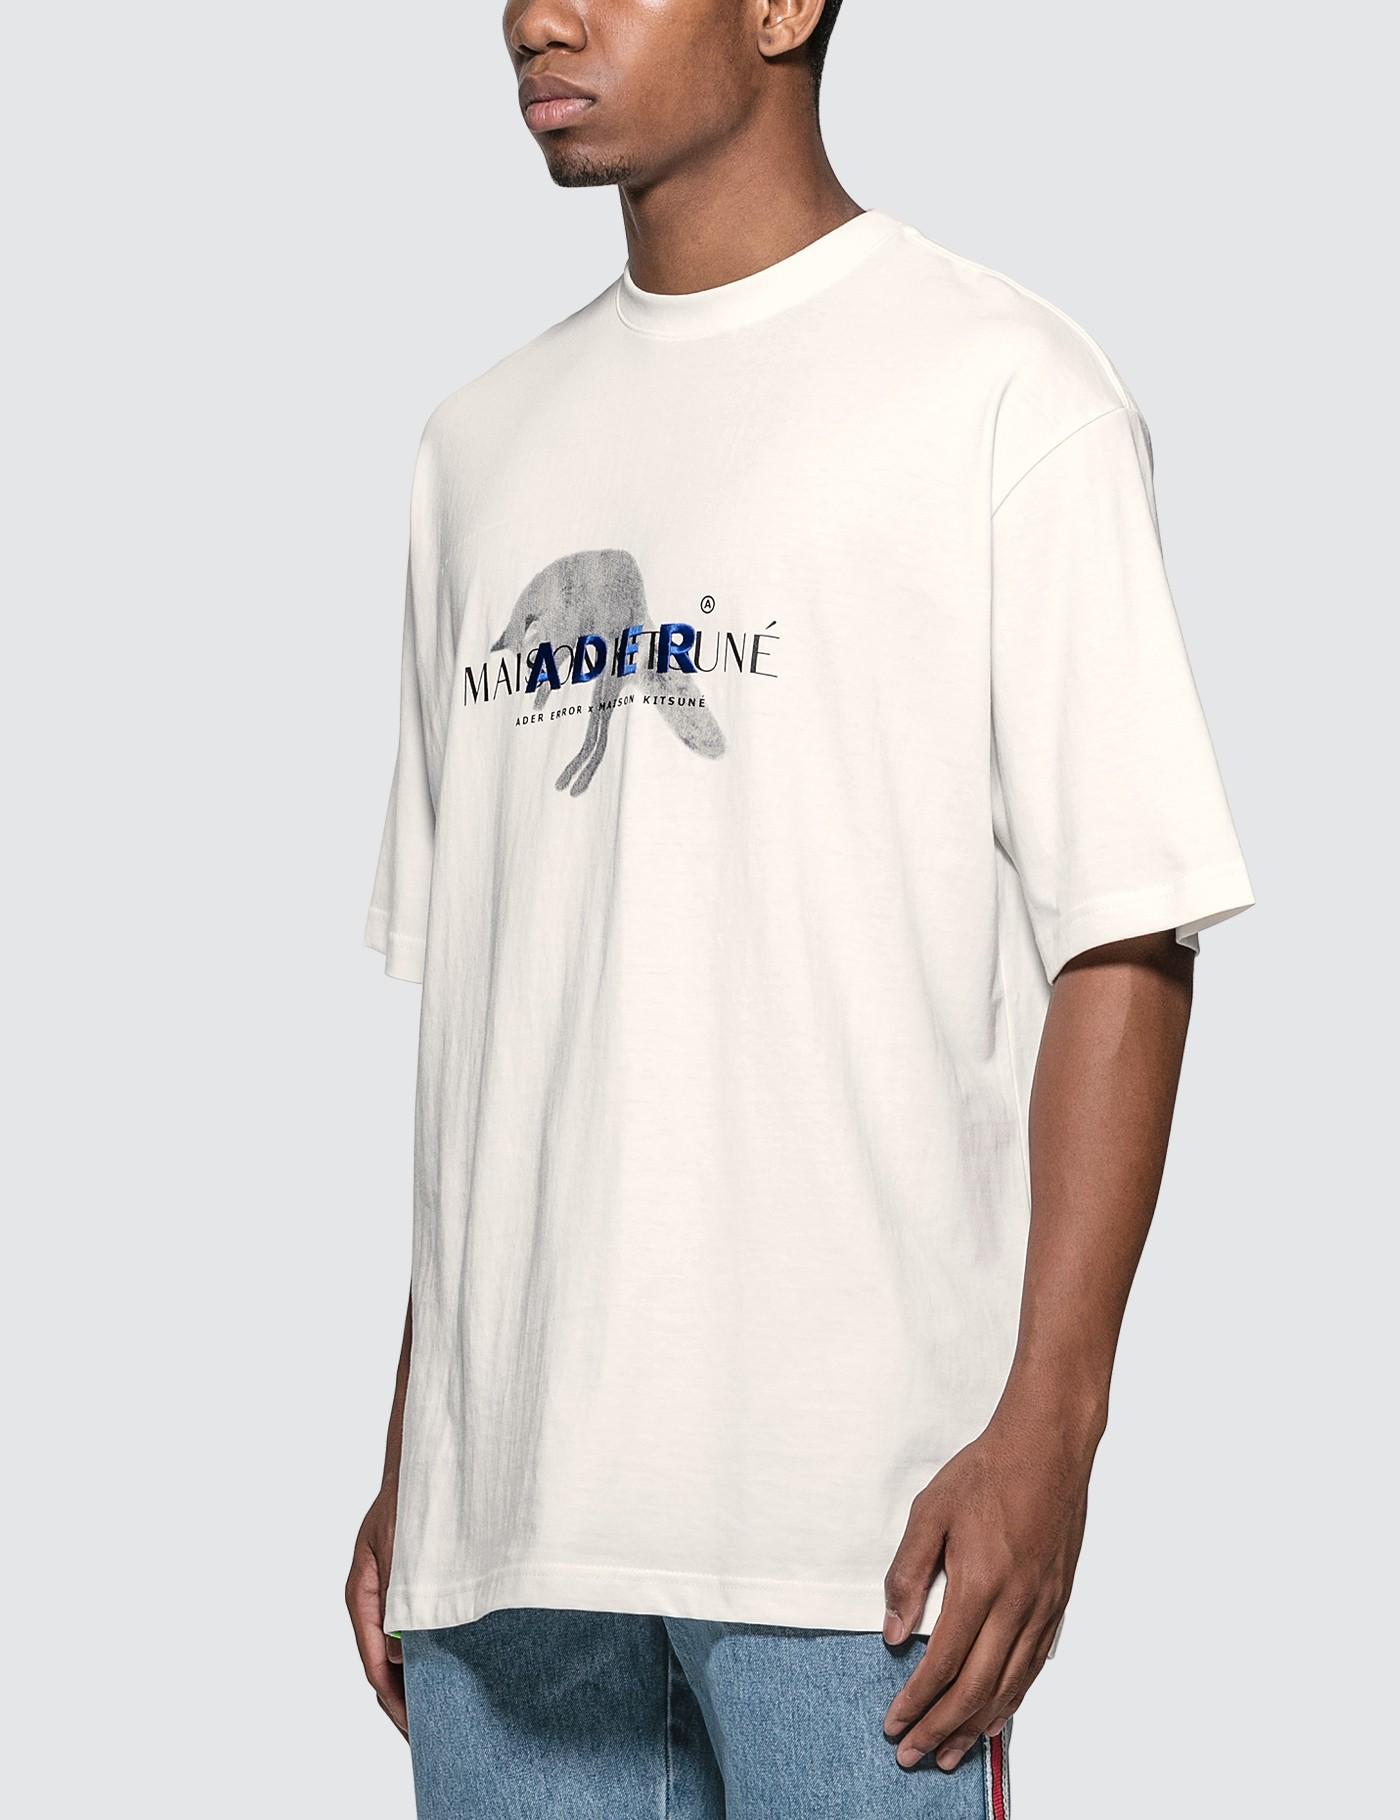 Maison Kitsuné Cotton Ader Error X Jump Fox T-shirt in White for 